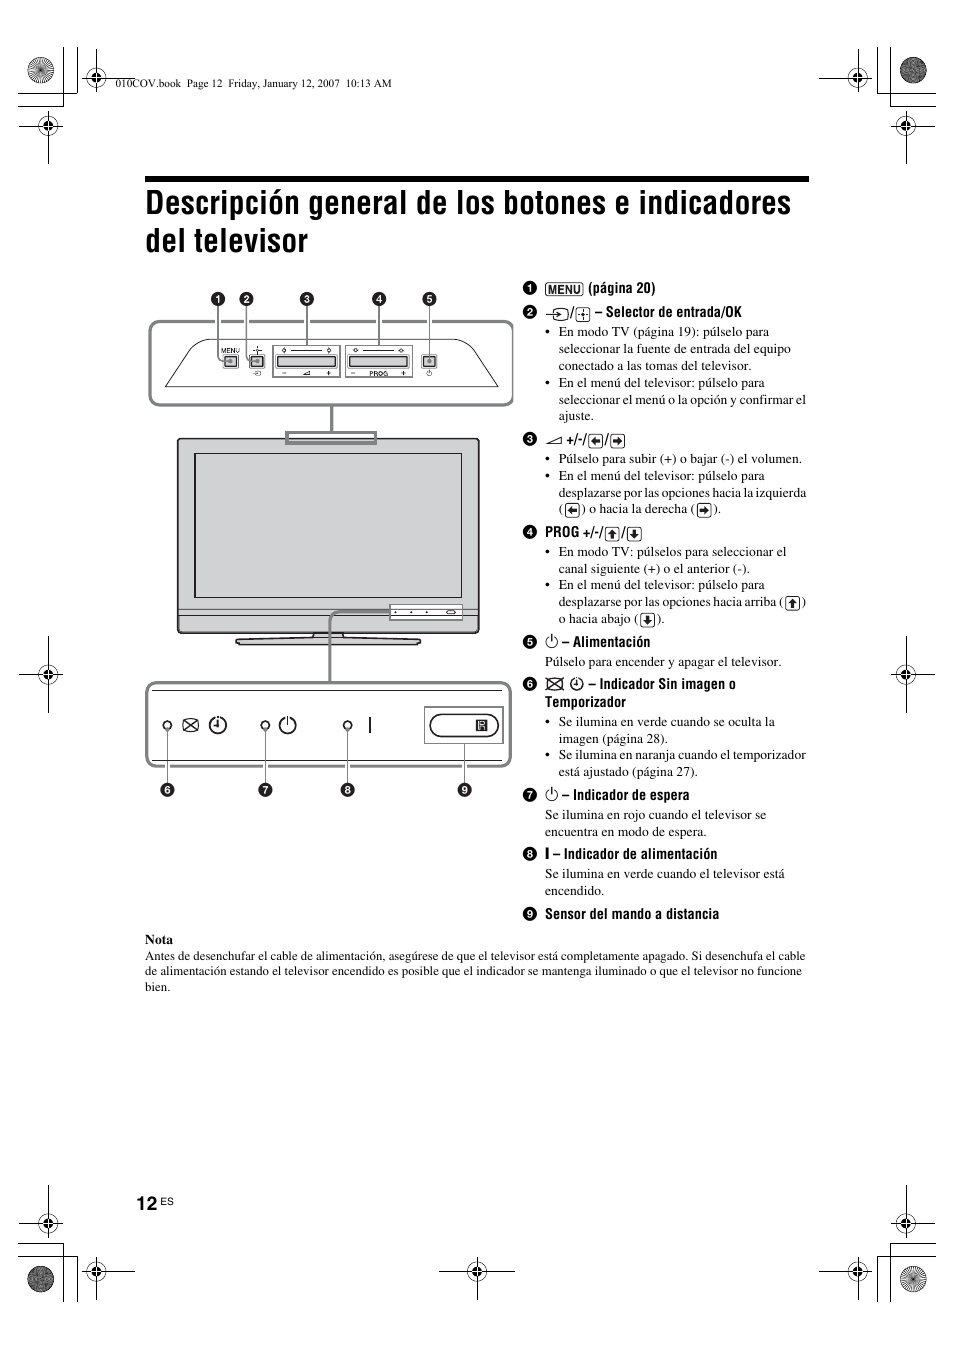 Sony KDL-46V2500 Manual del usuario | Página 96 / 166